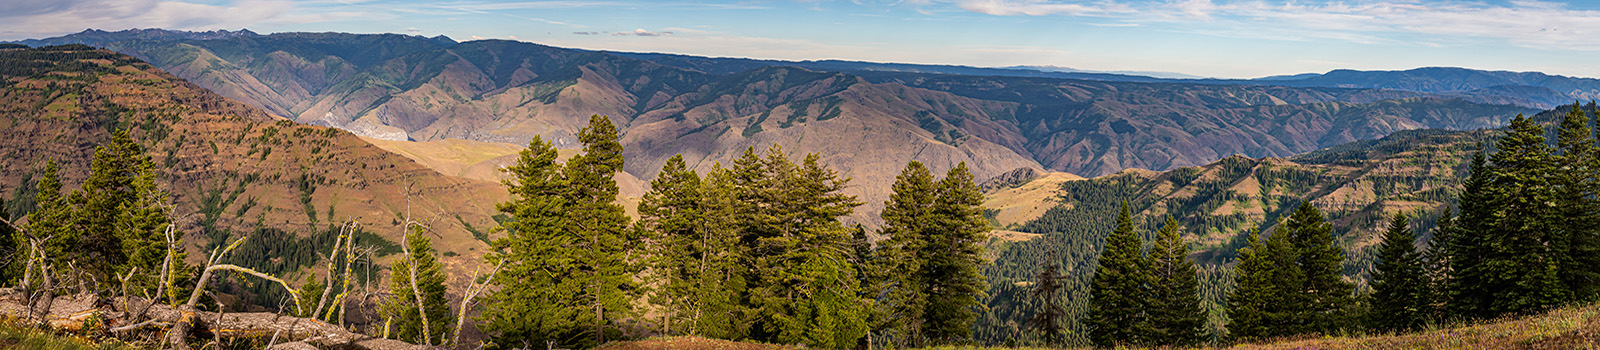 Hells Canyon Overlook - looking into Idaho from Oregon